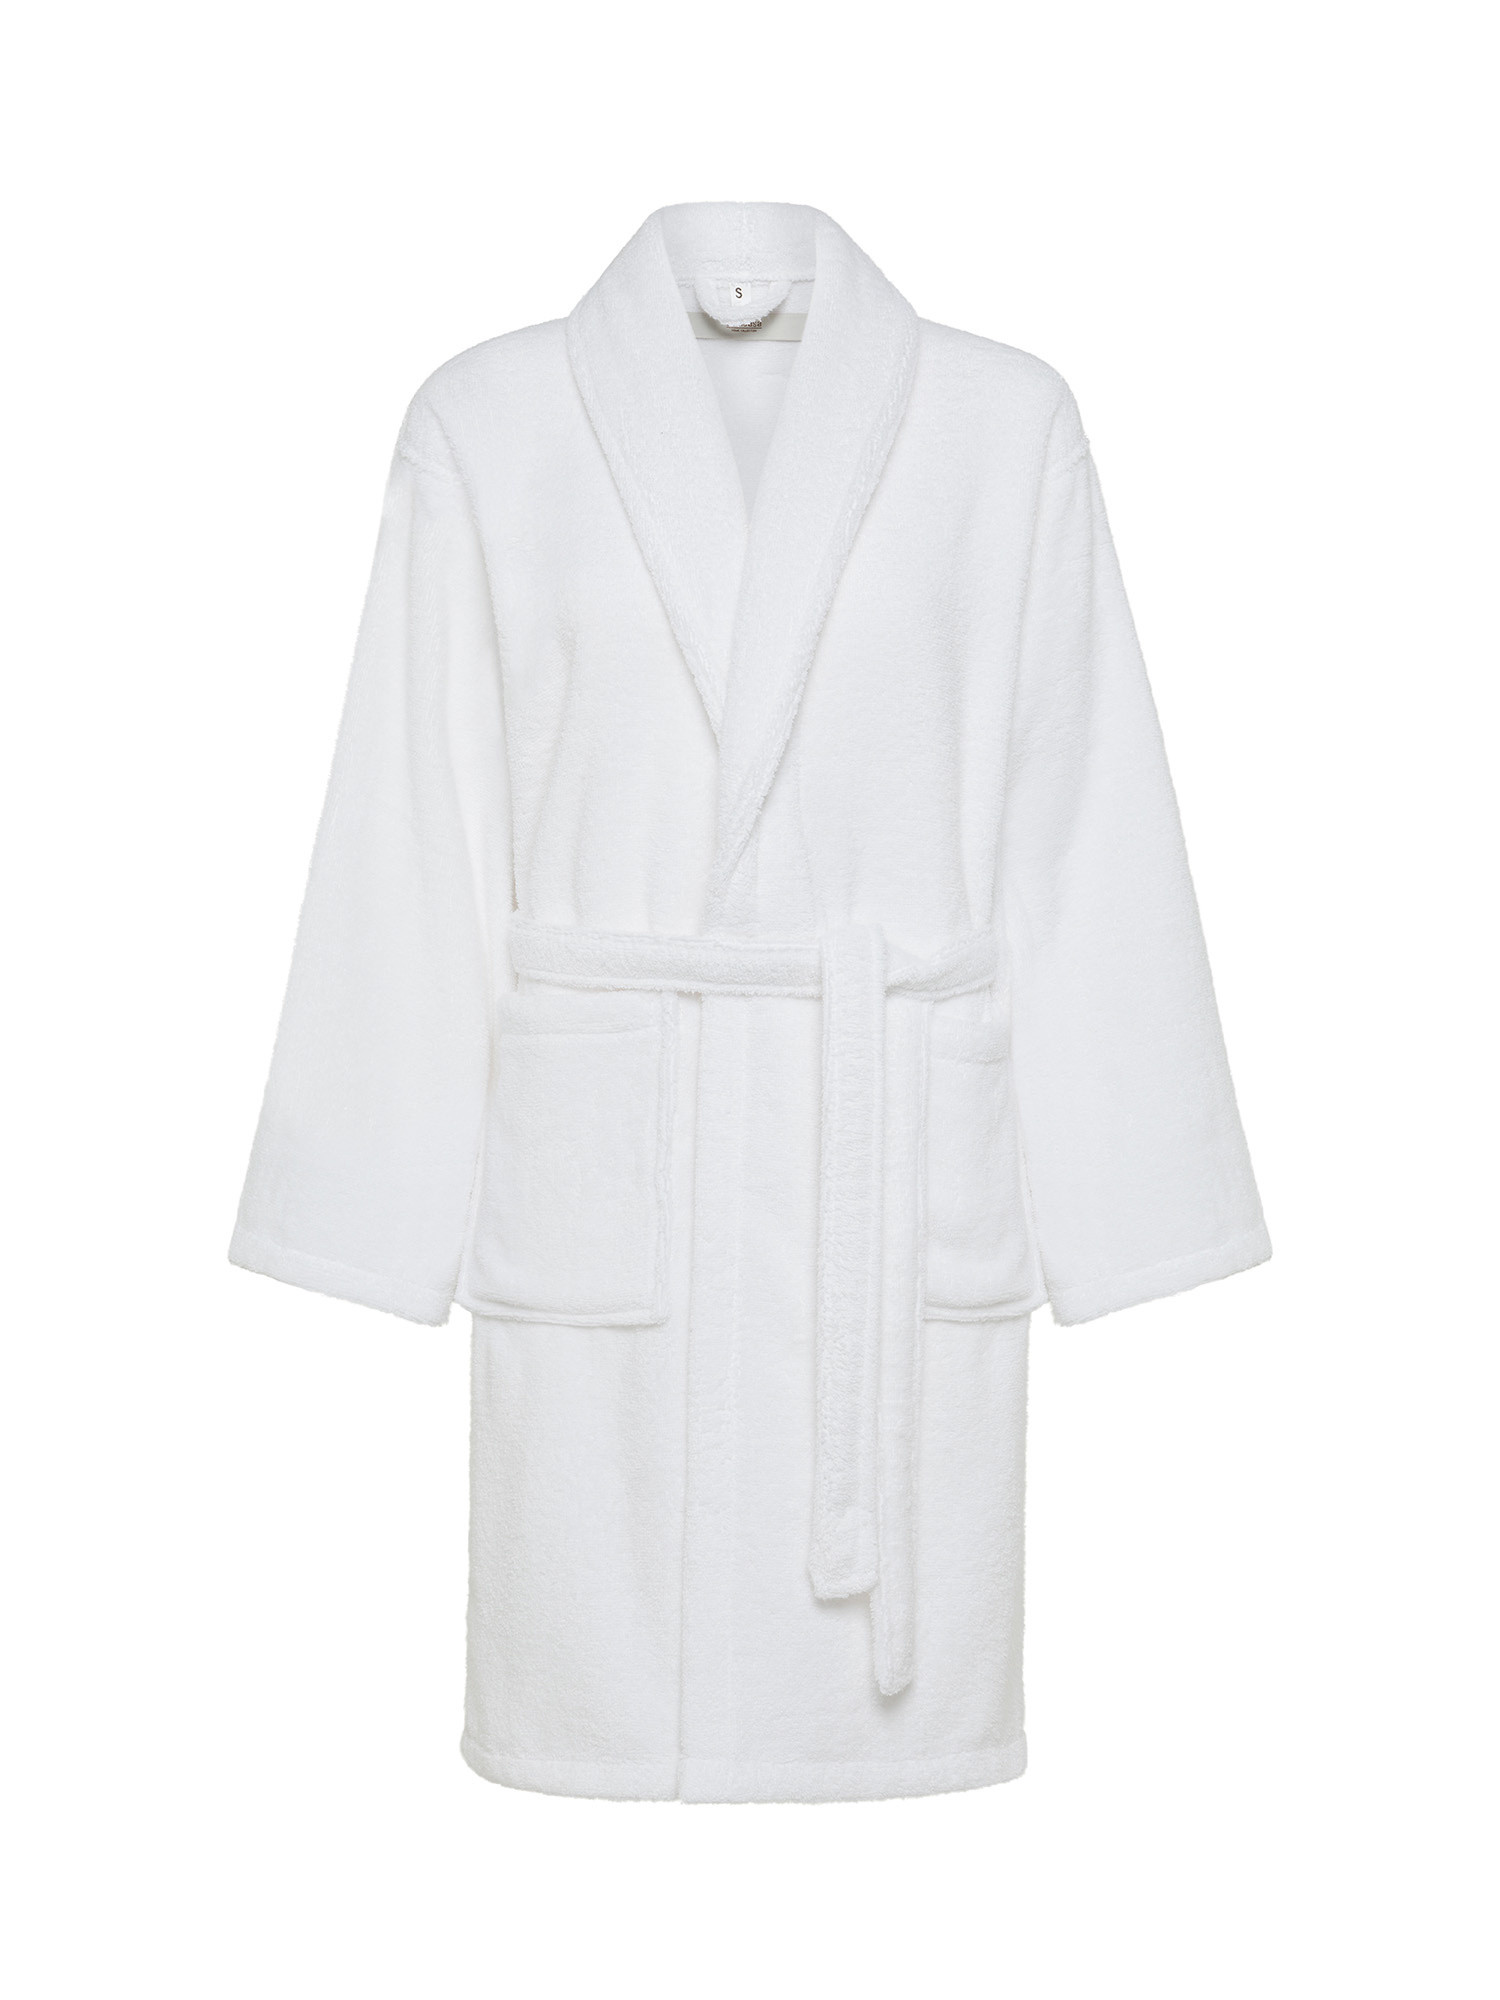 Cotton terry bathrobe, White, large image number 0